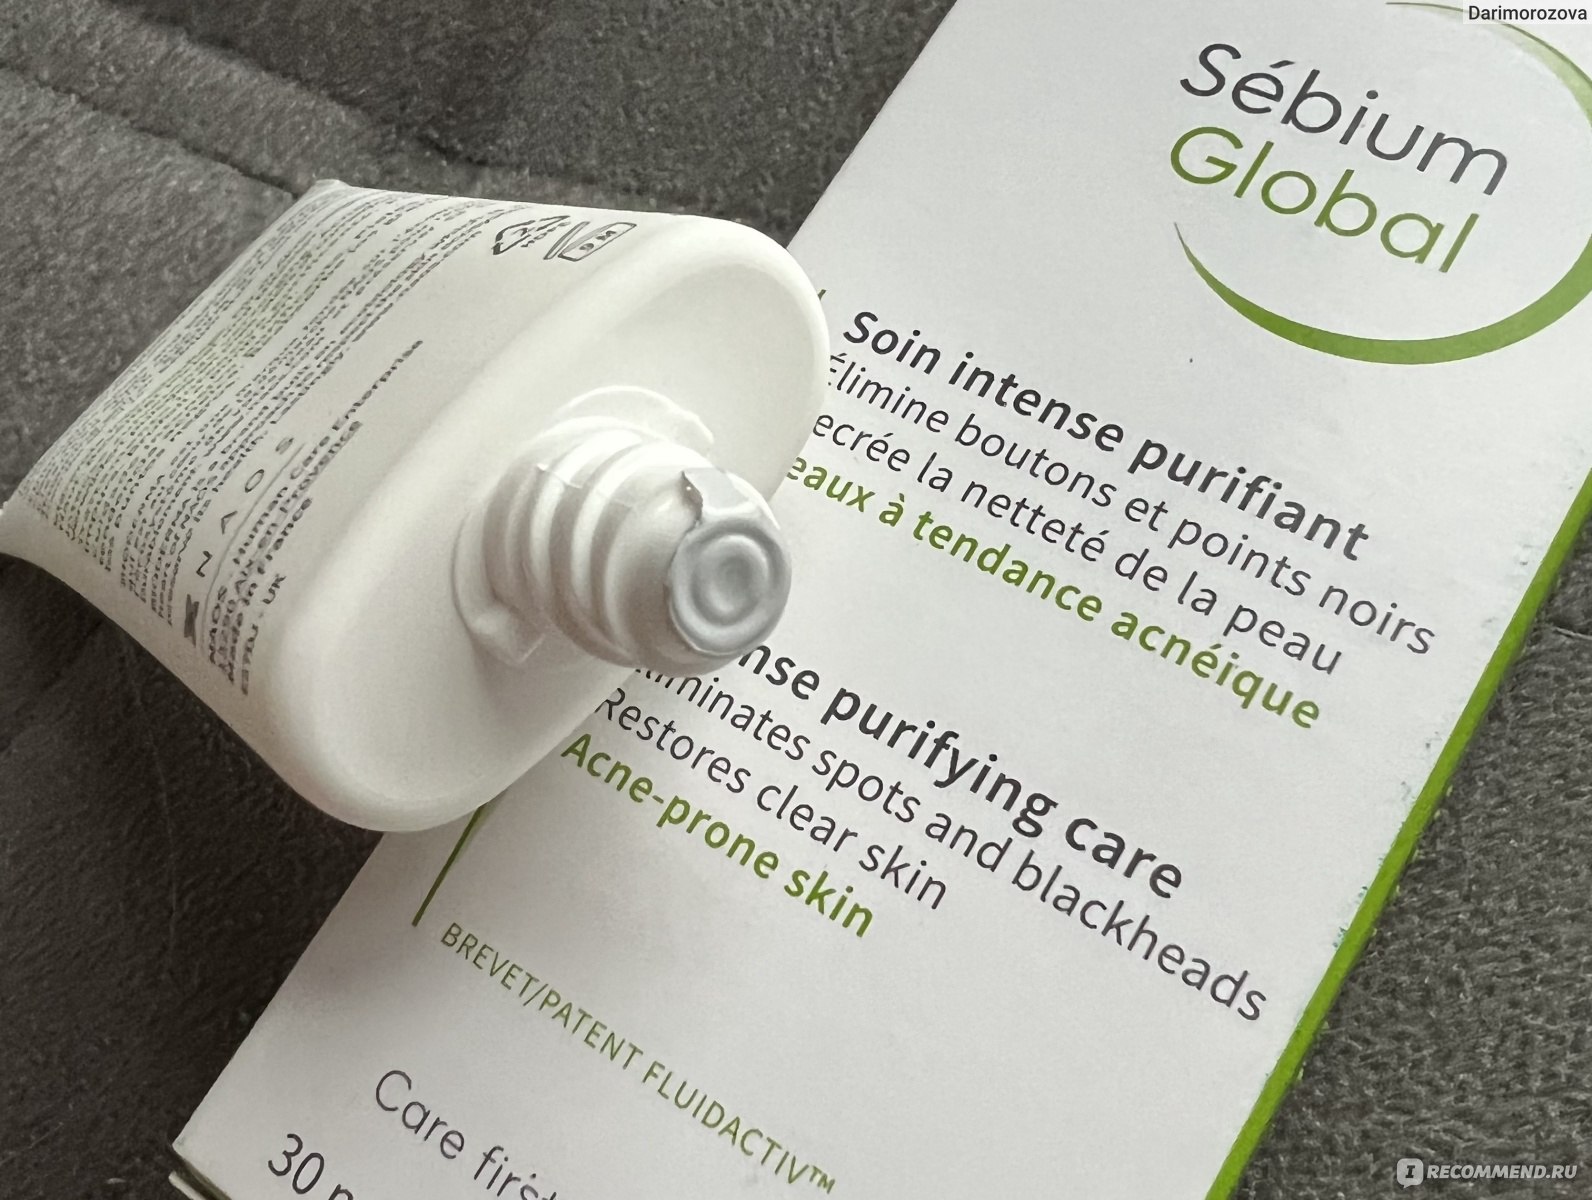 Крем для проблемной кожи Bioderma Sebium Global фото